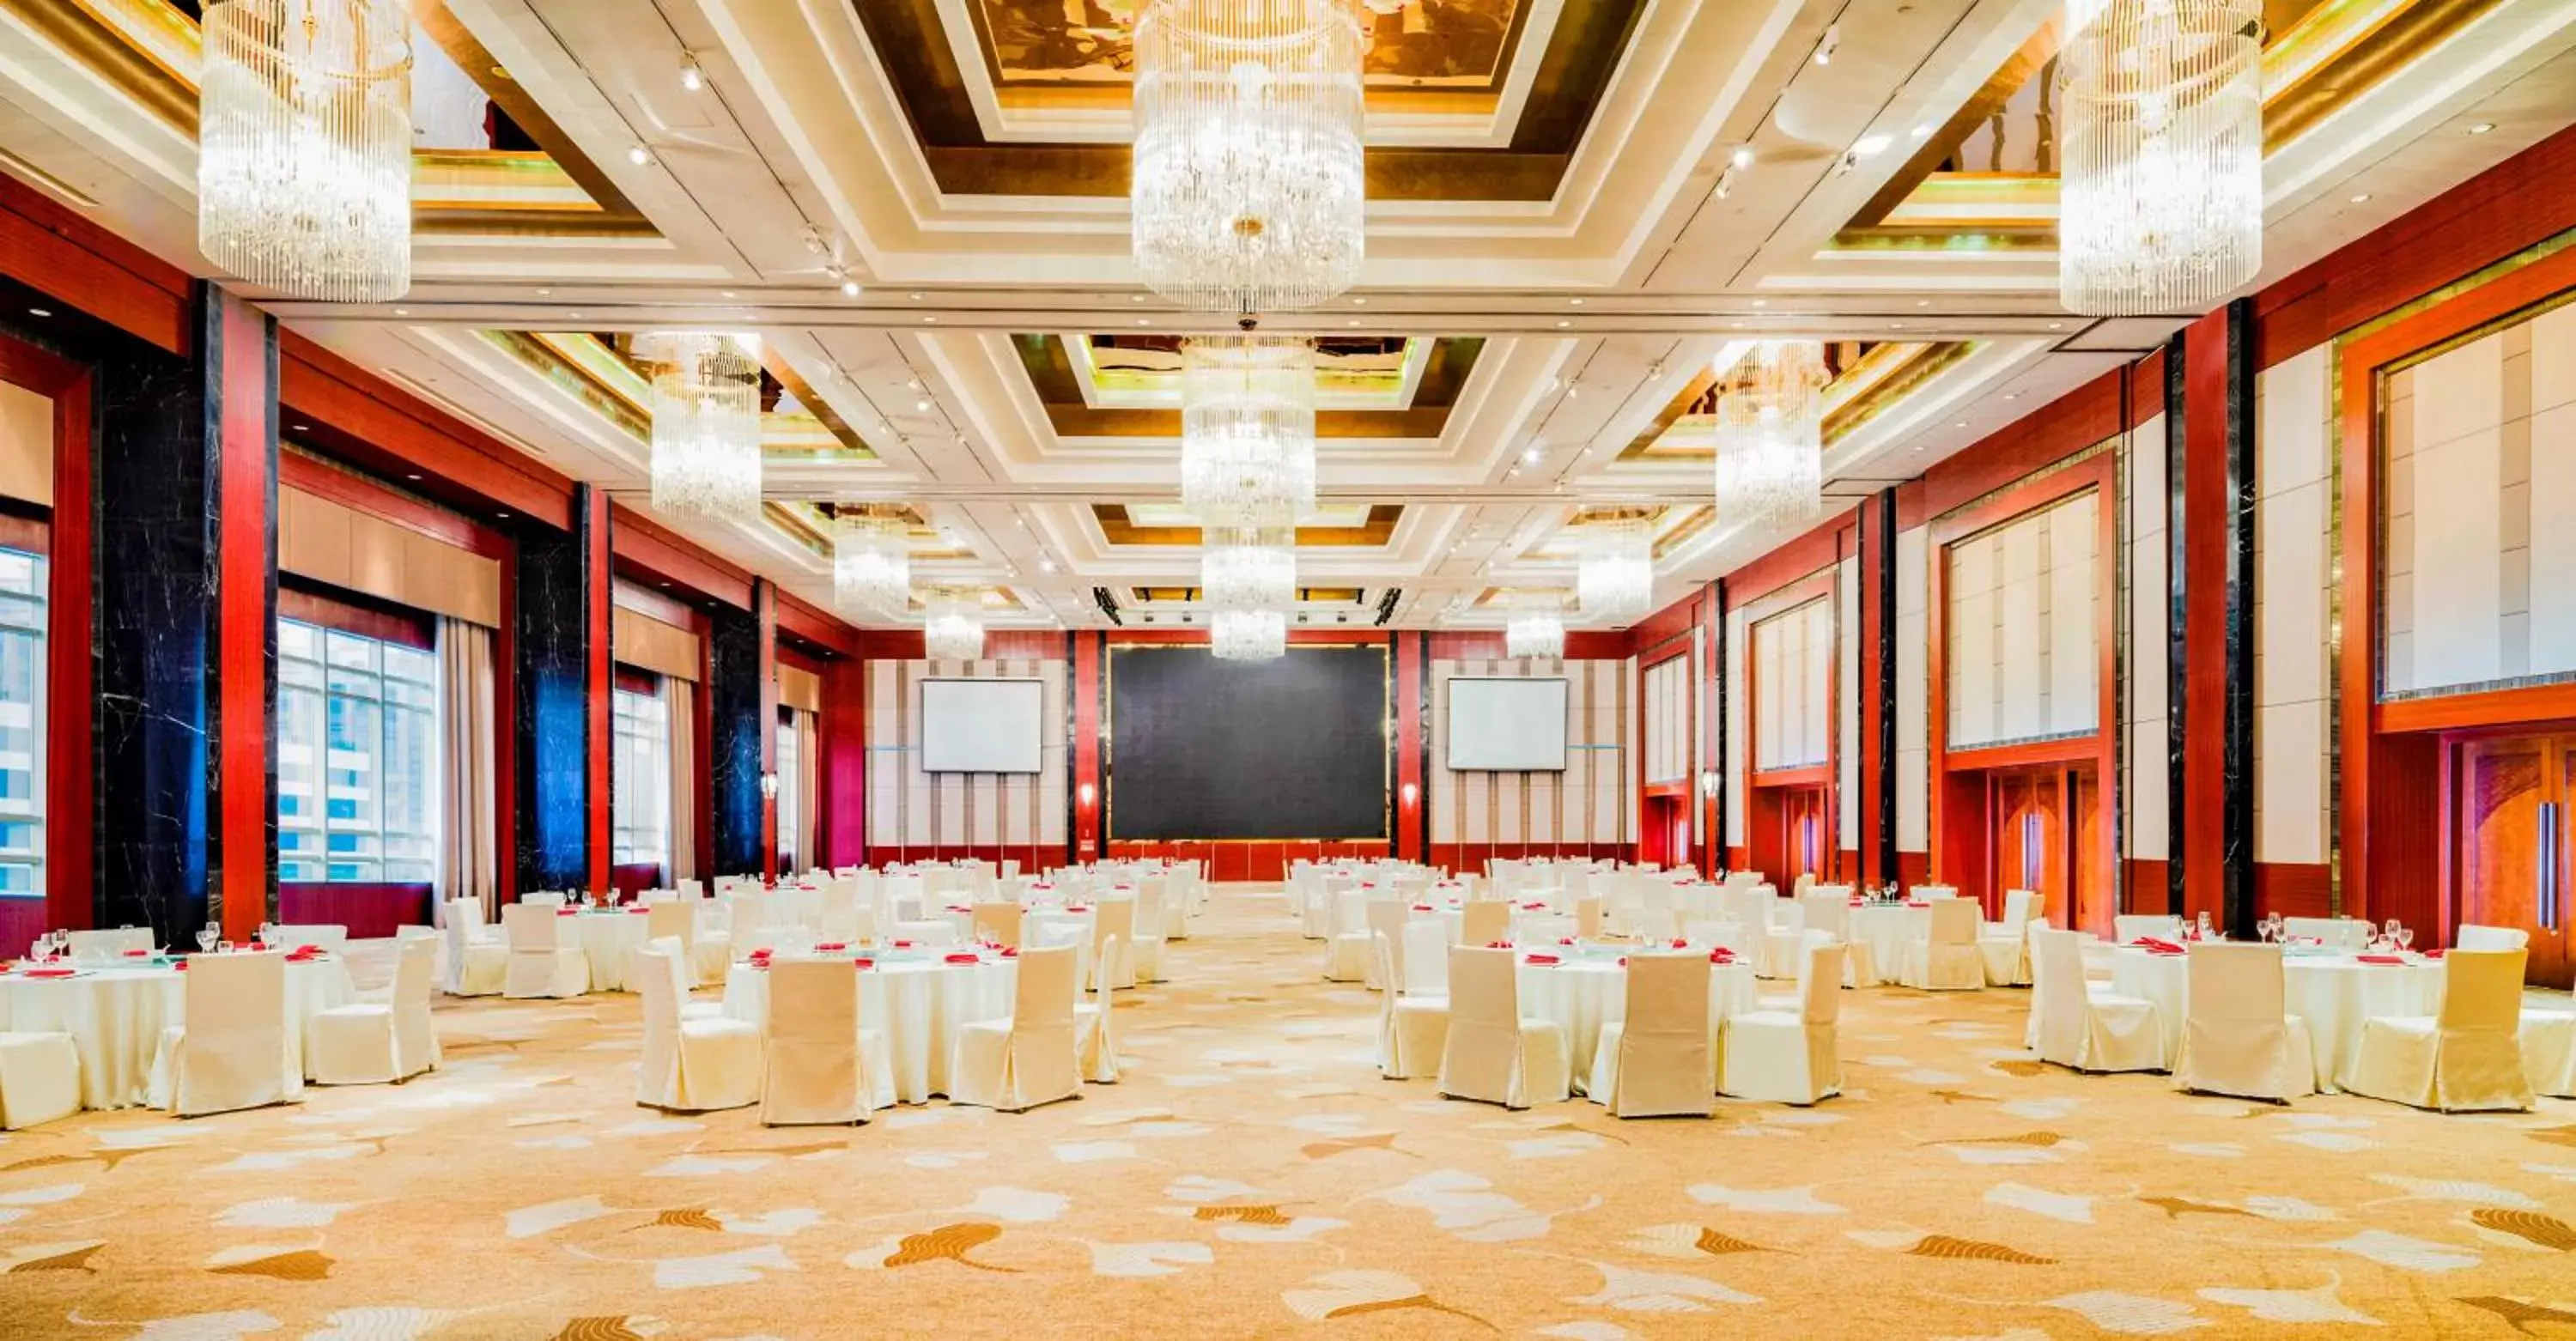 Banquet/Function facilities, Banquet Facilities in Sheraton Dongguan Hotel